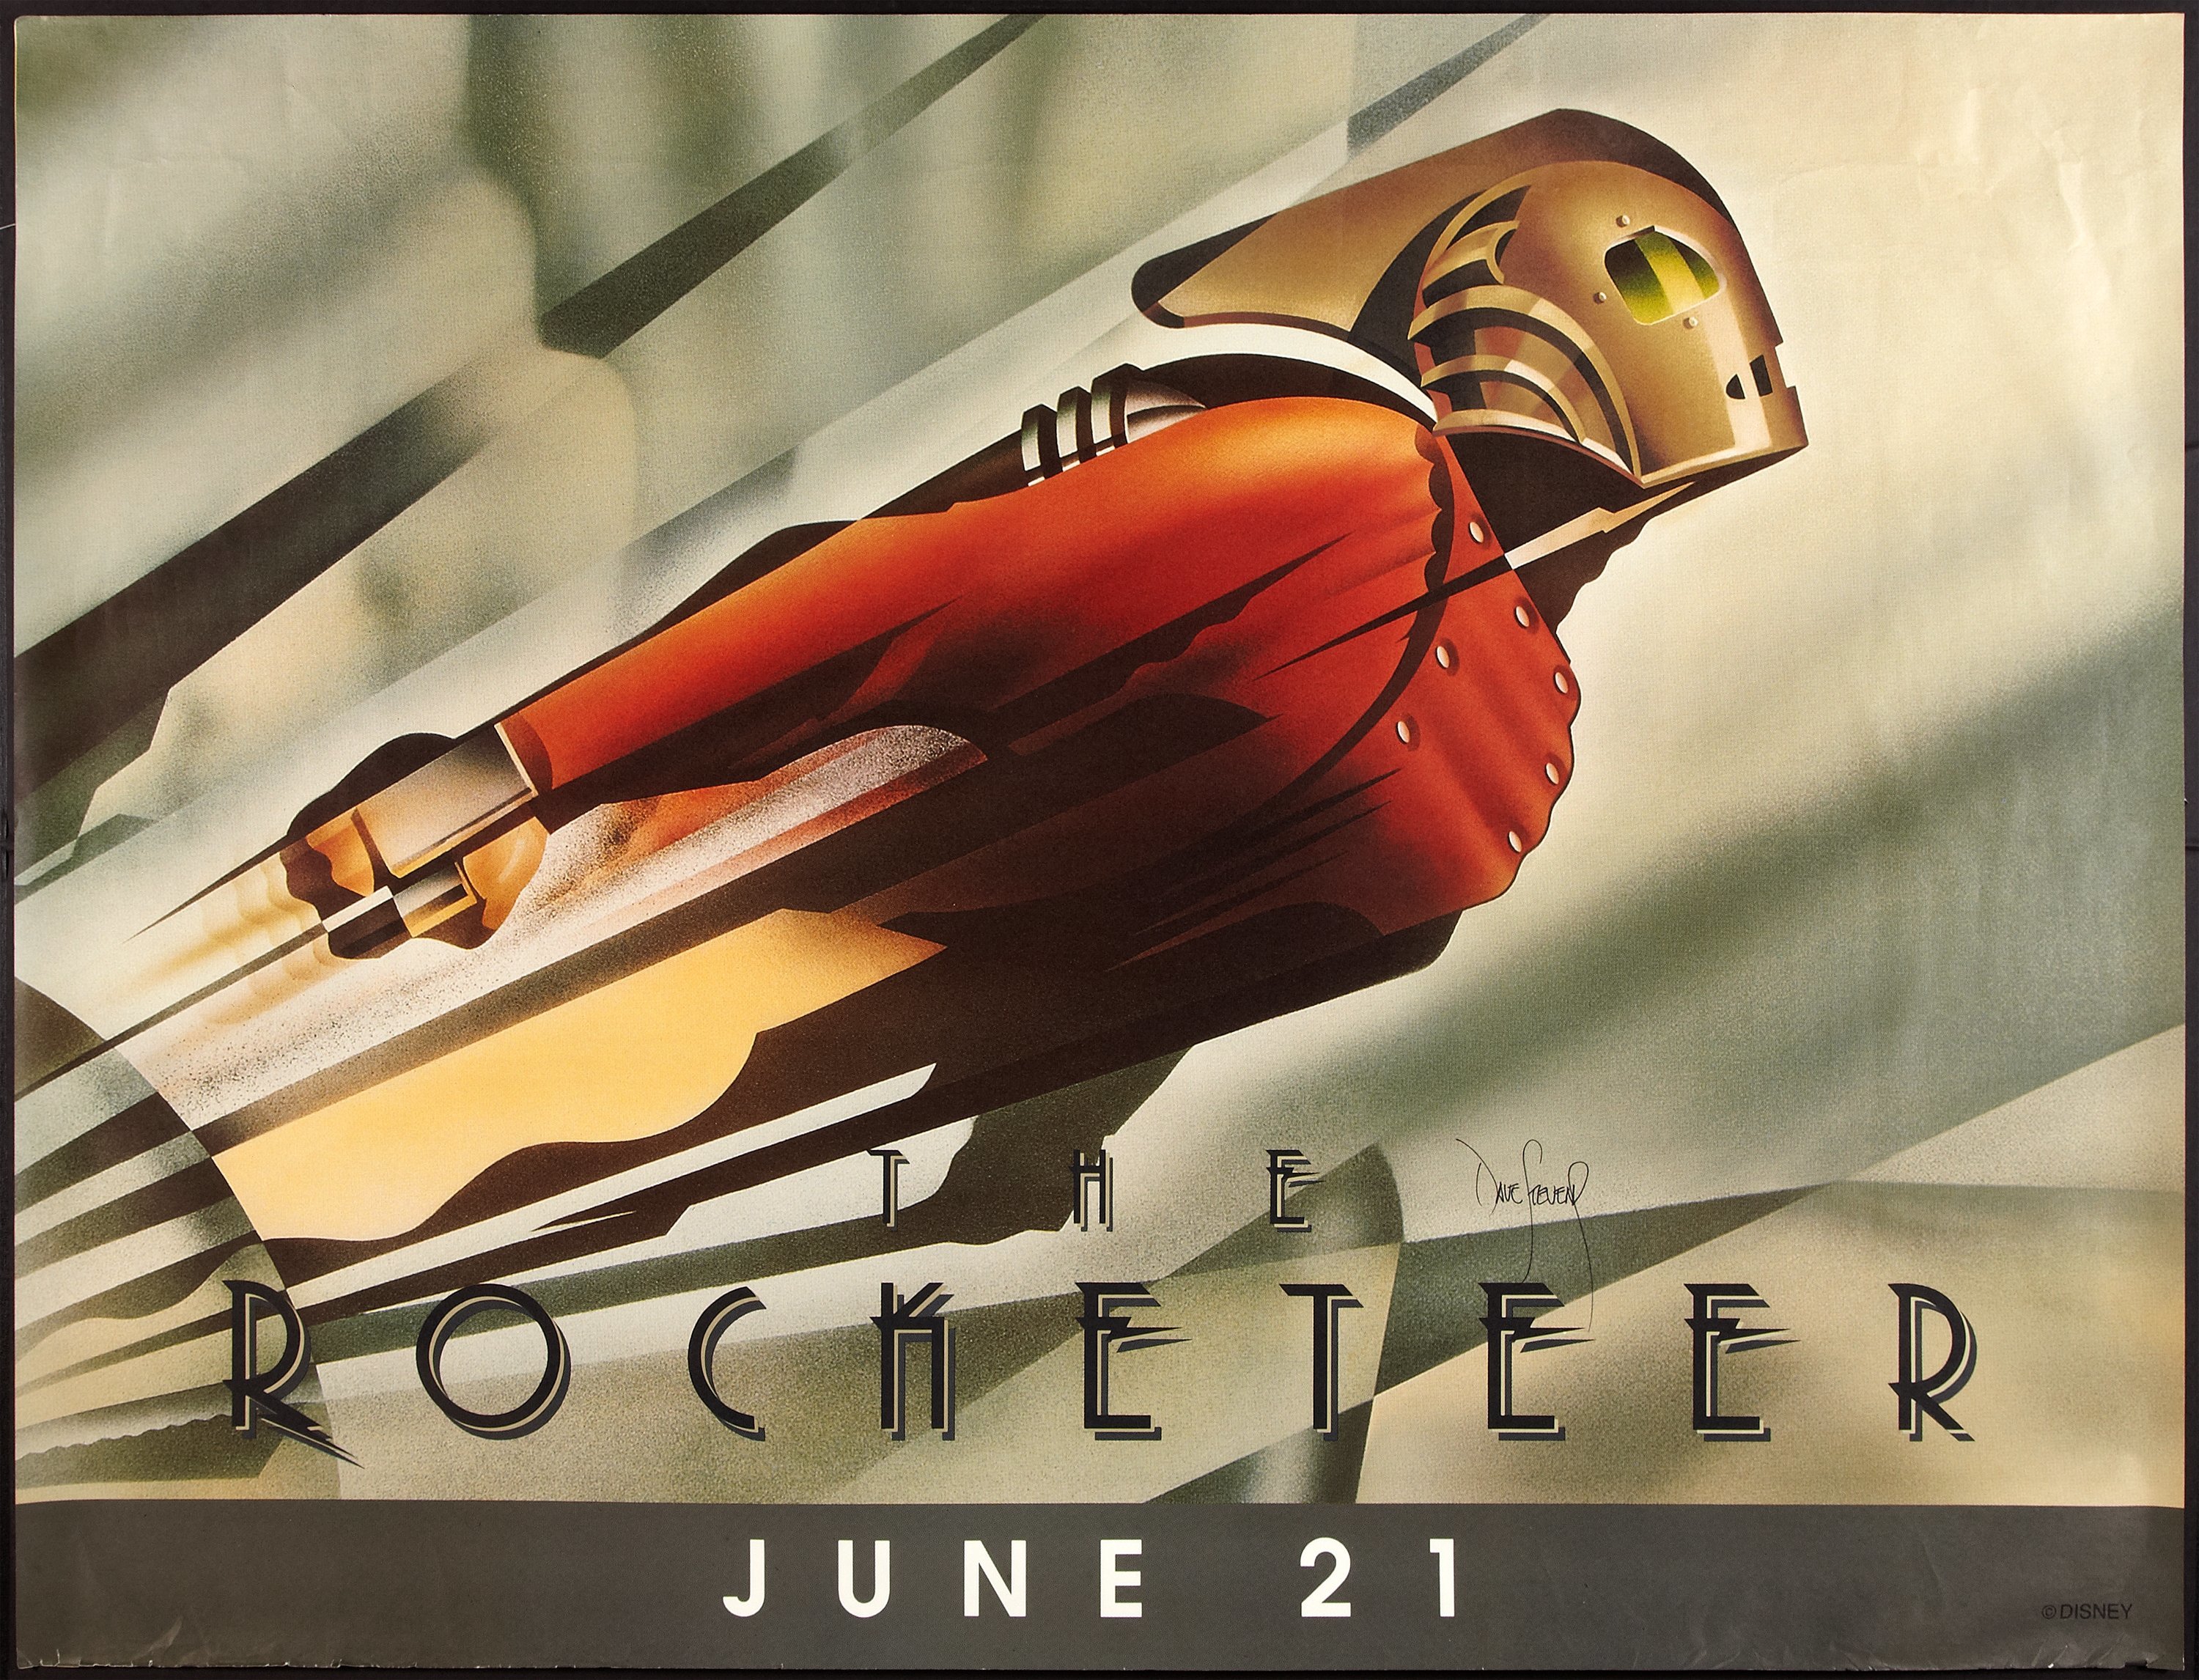 The Rocketeer: Coming June 21 1991